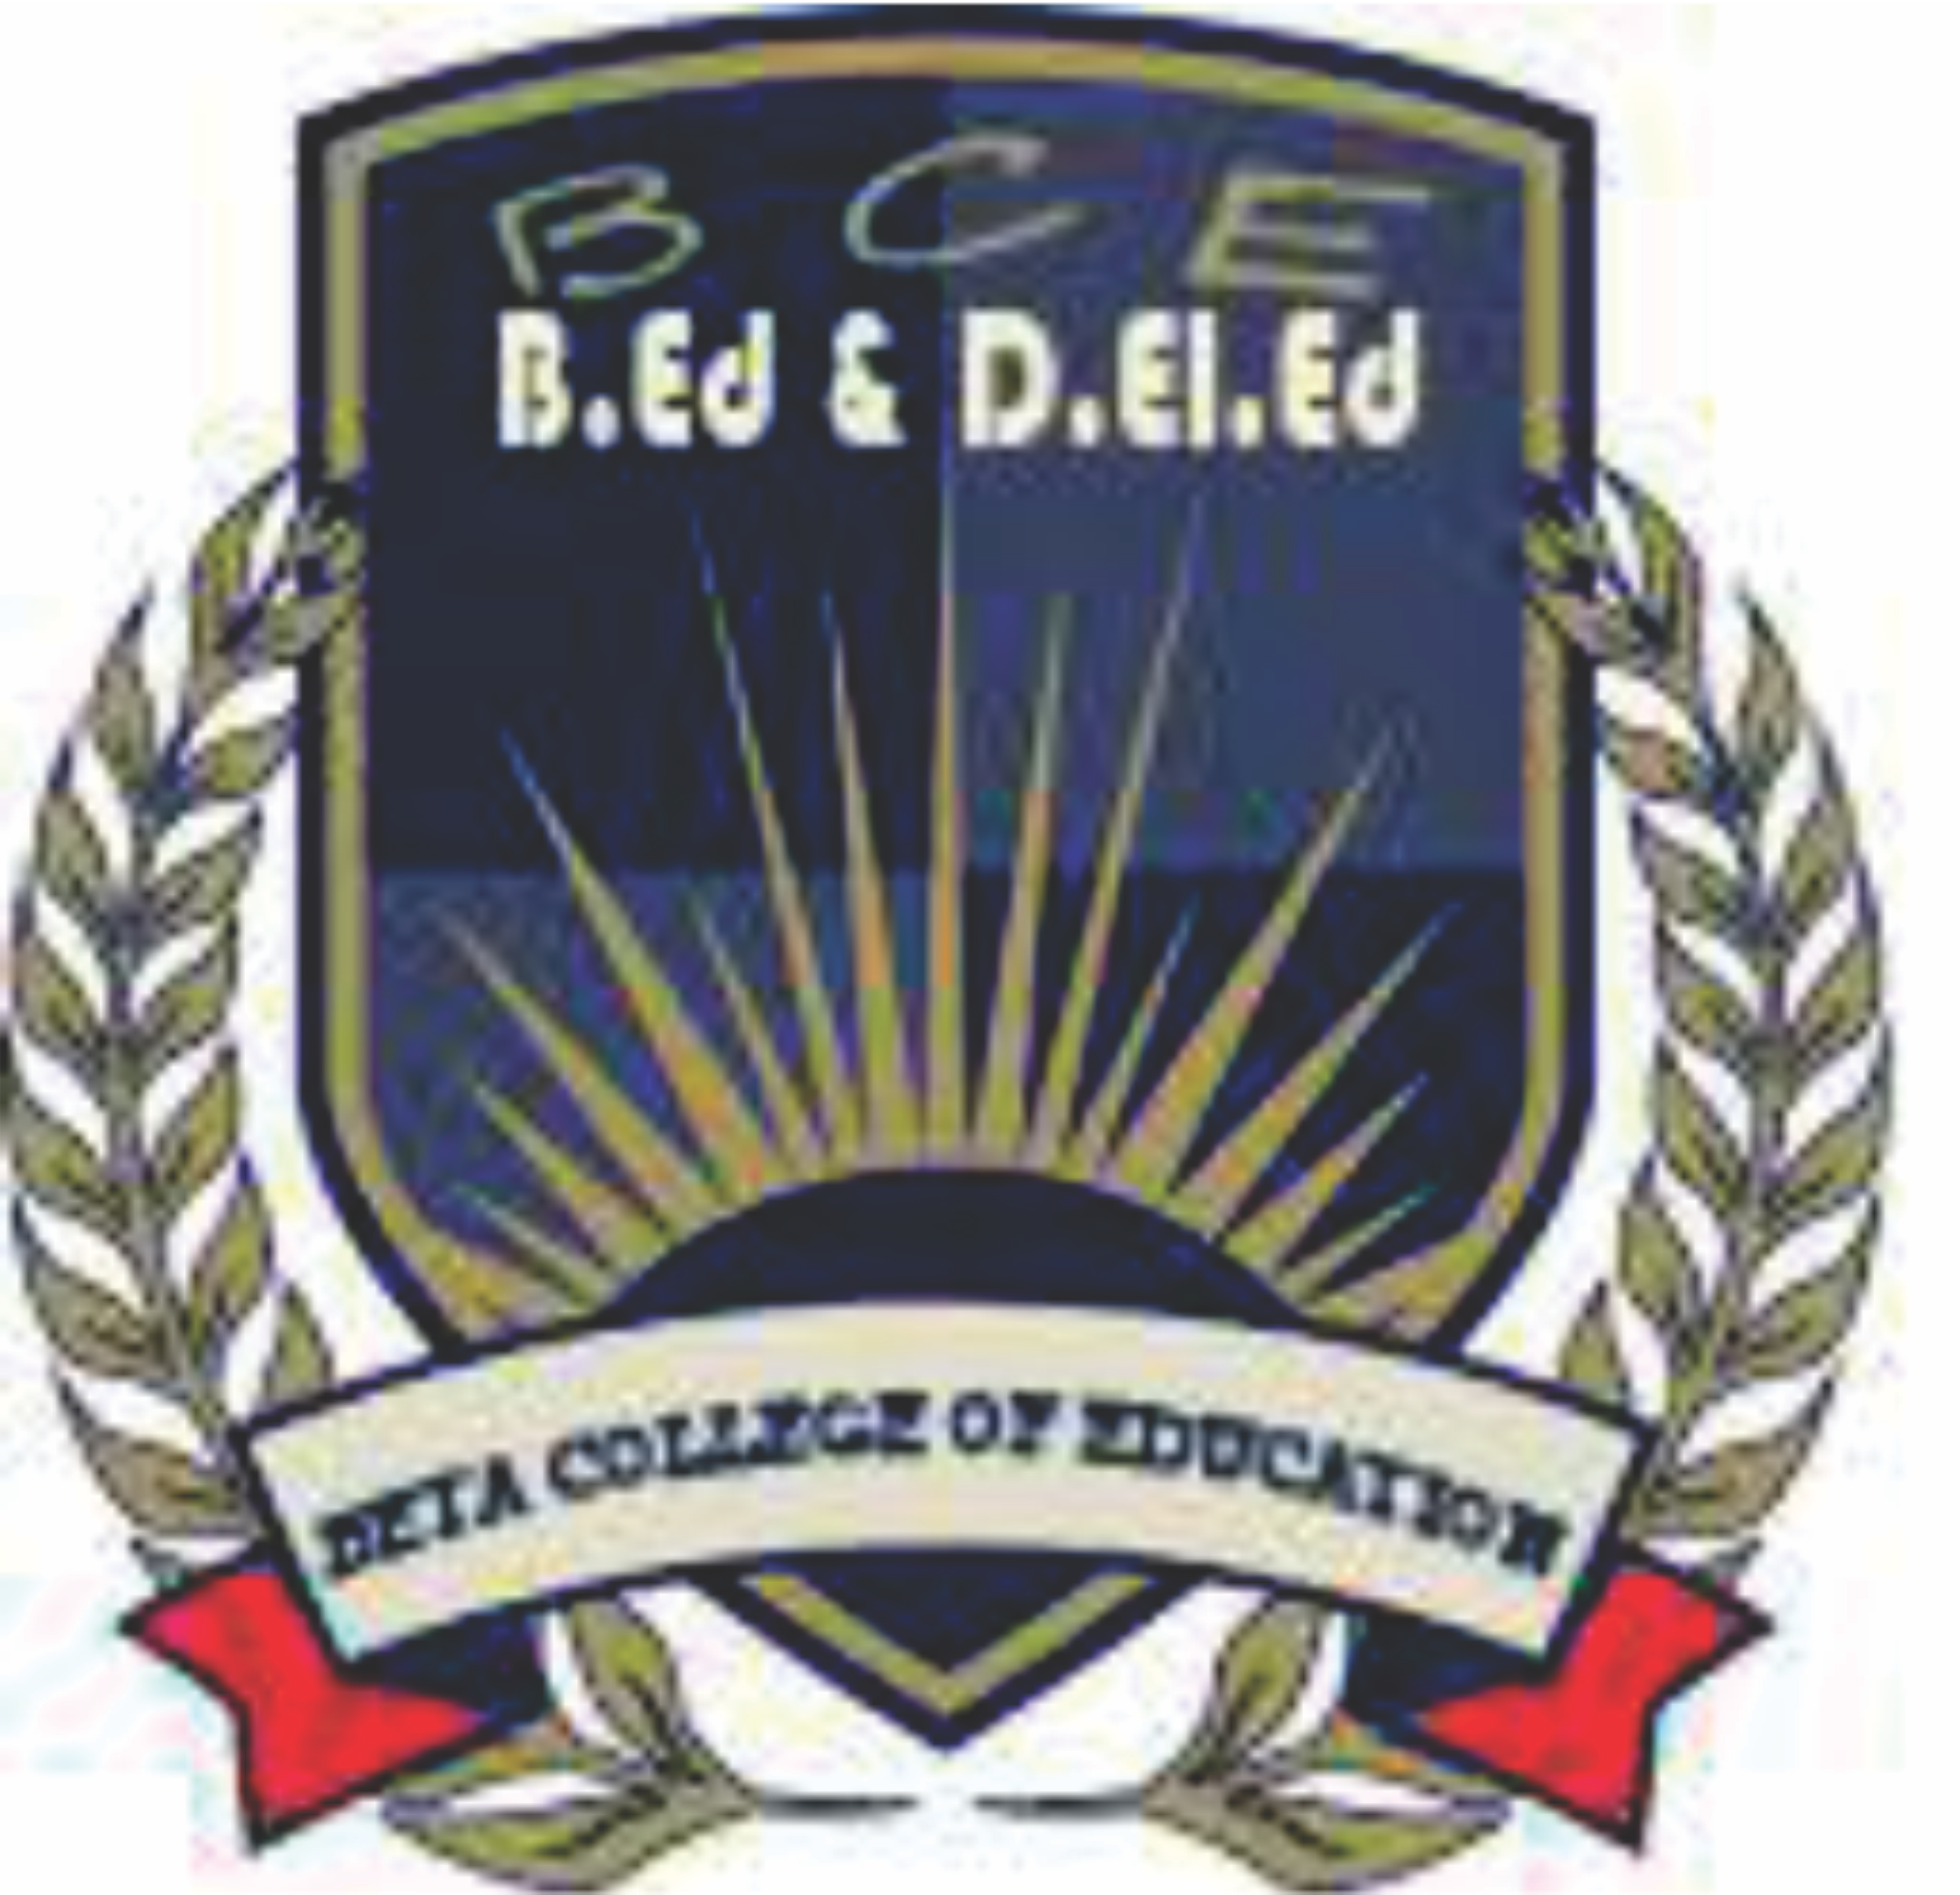 Beta College of Education